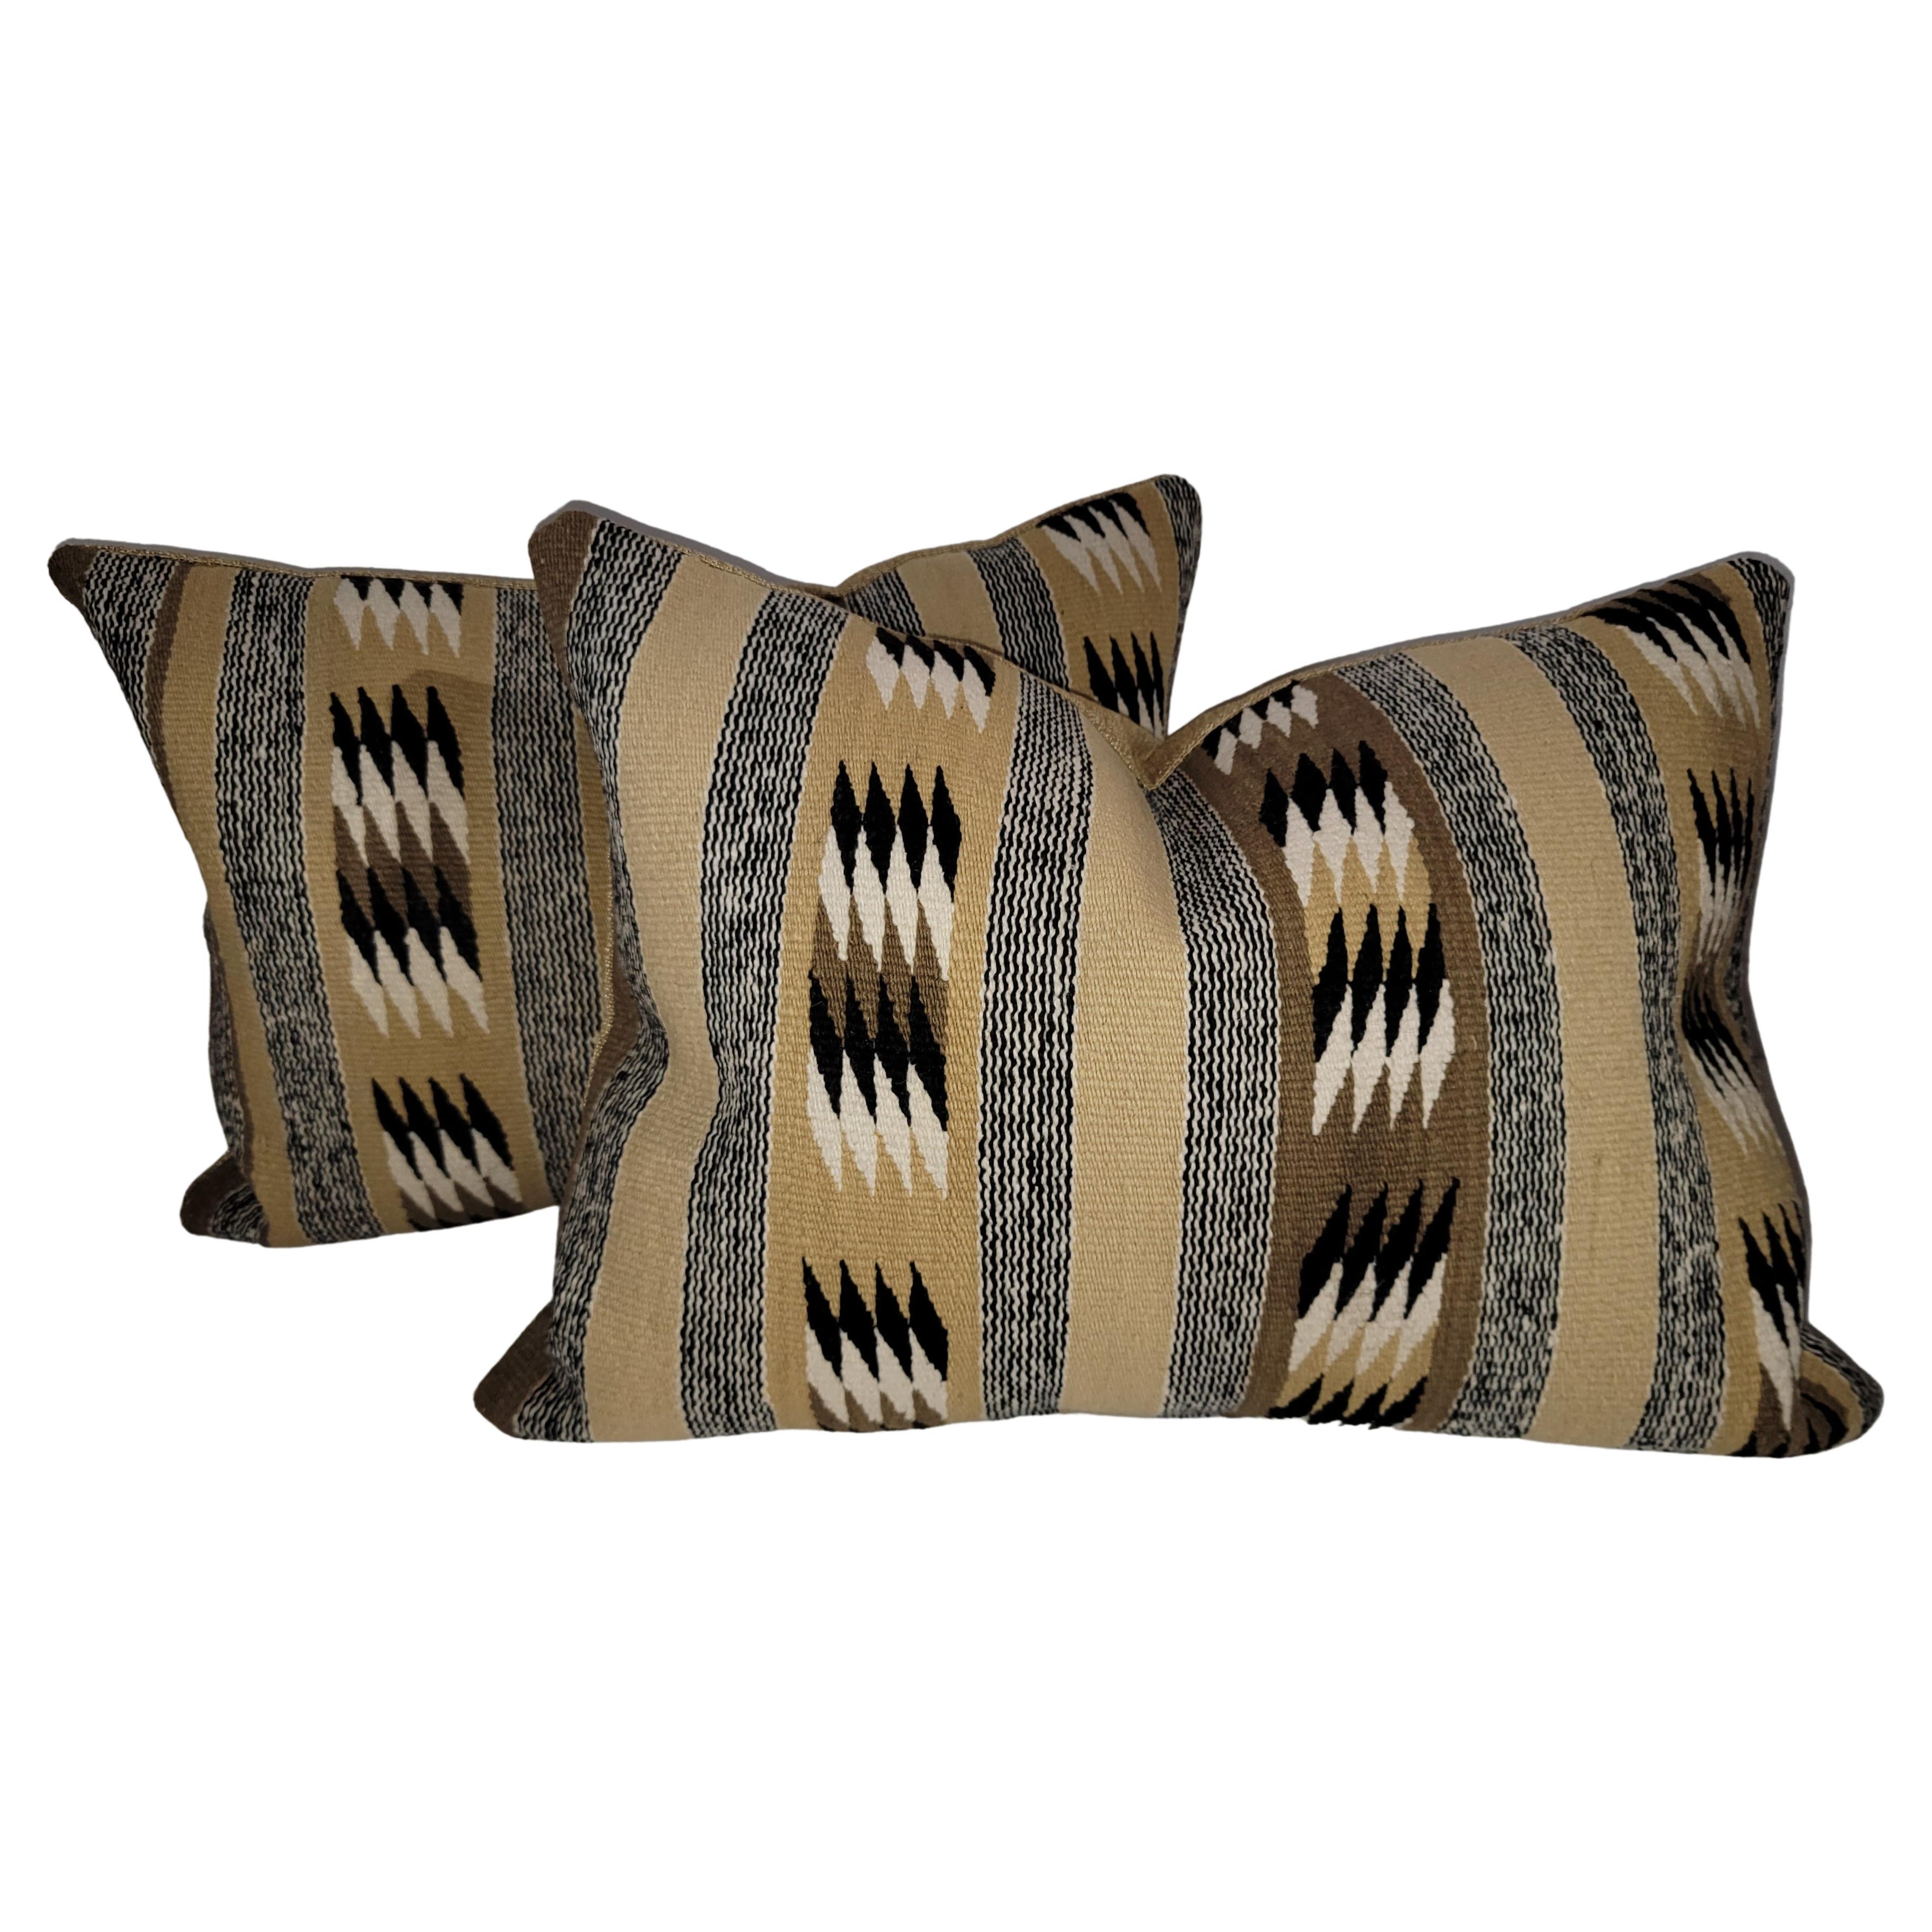 Chinle Navajo Indian Weaving Bolster Pillows, Pair